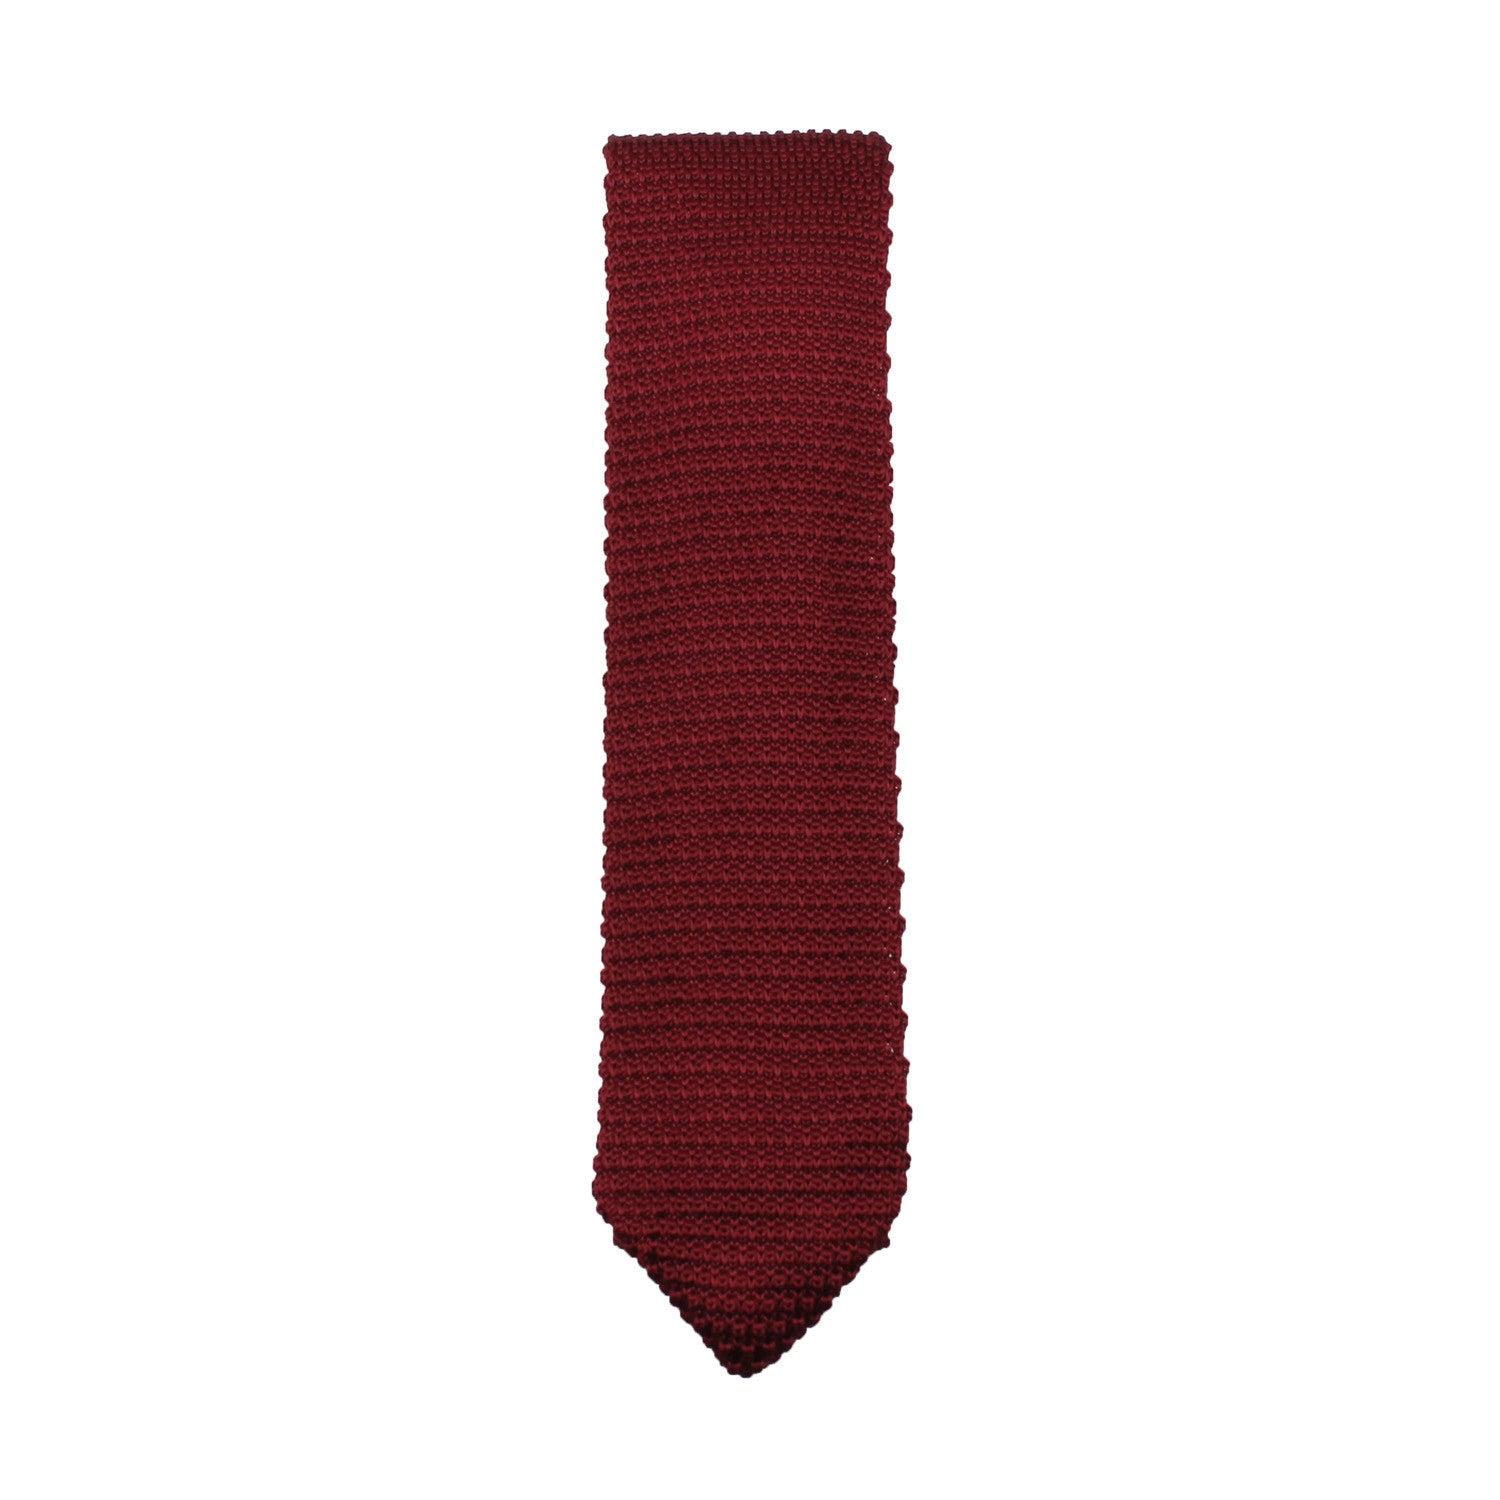 Dark Rosewood Maroon Pointed Knitted Tie Vertical View